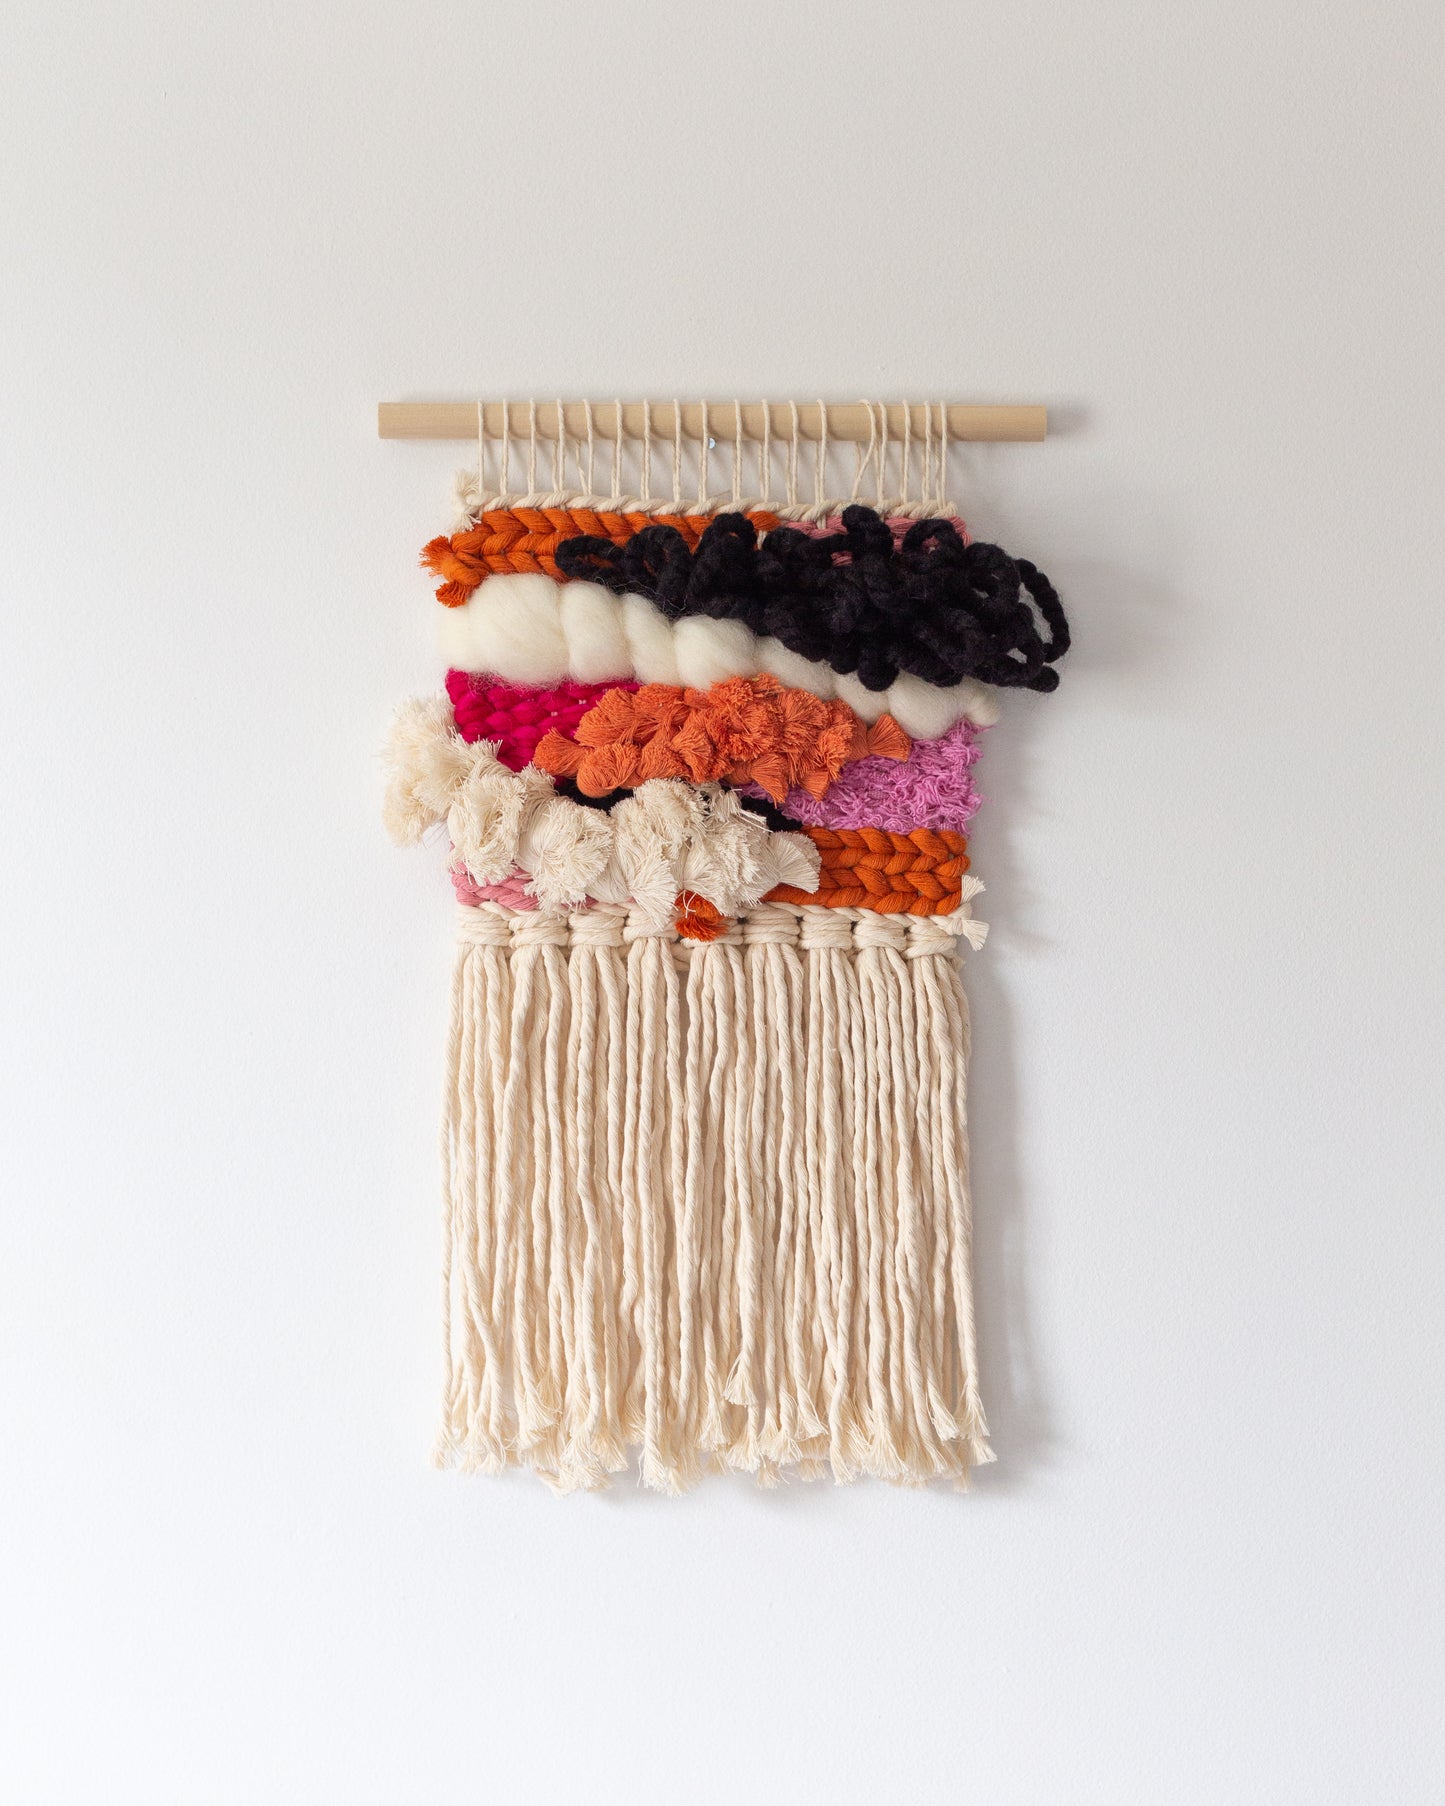 Weaving #8 | Woven Wall Hanging